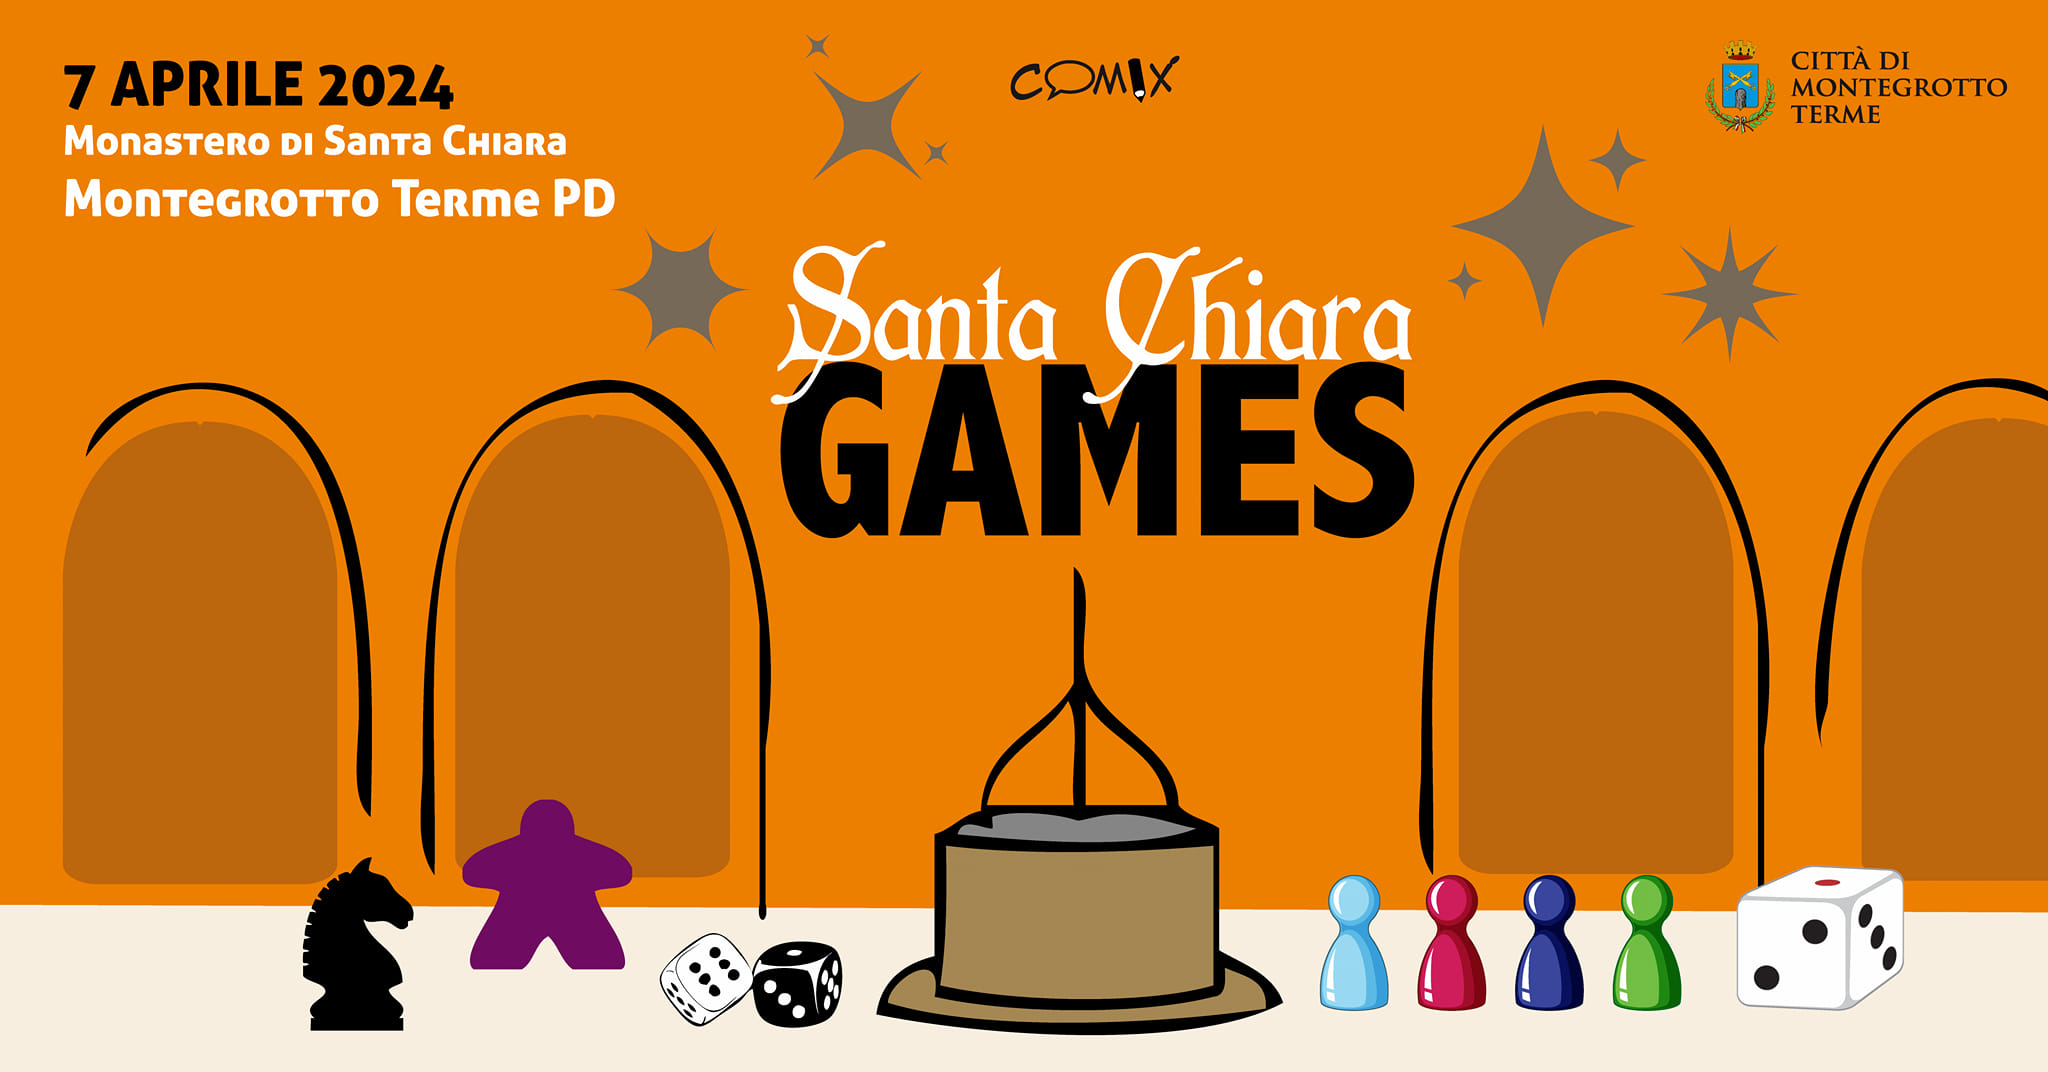 Comix presenta Santa Chiara Games: 7 aprile 2024